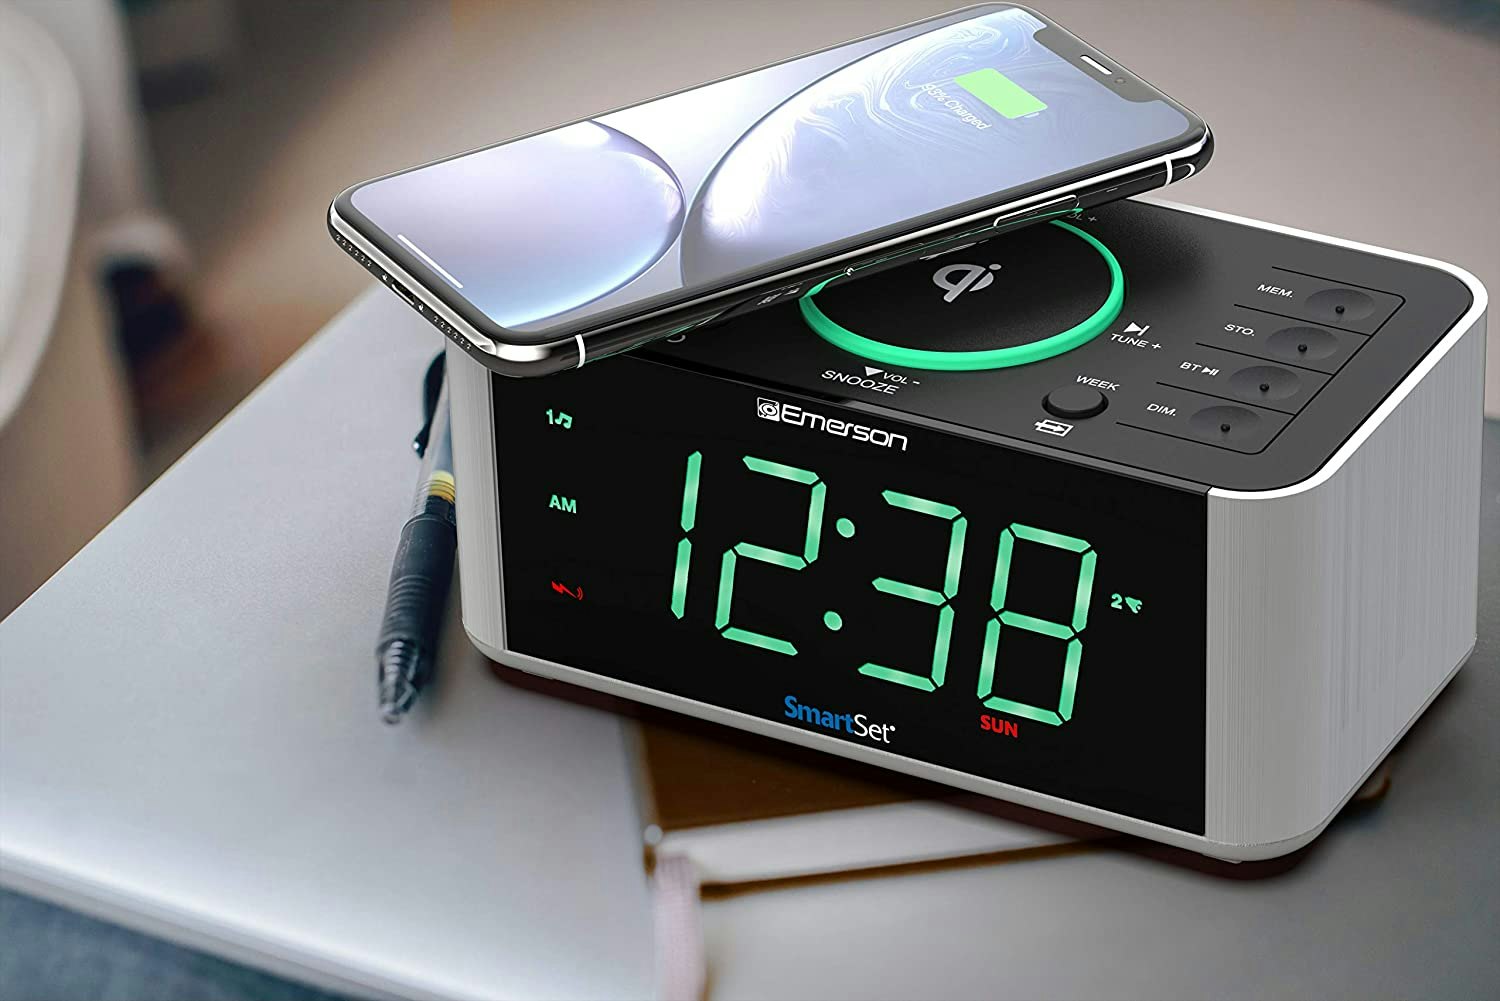 alarm clock phone charger